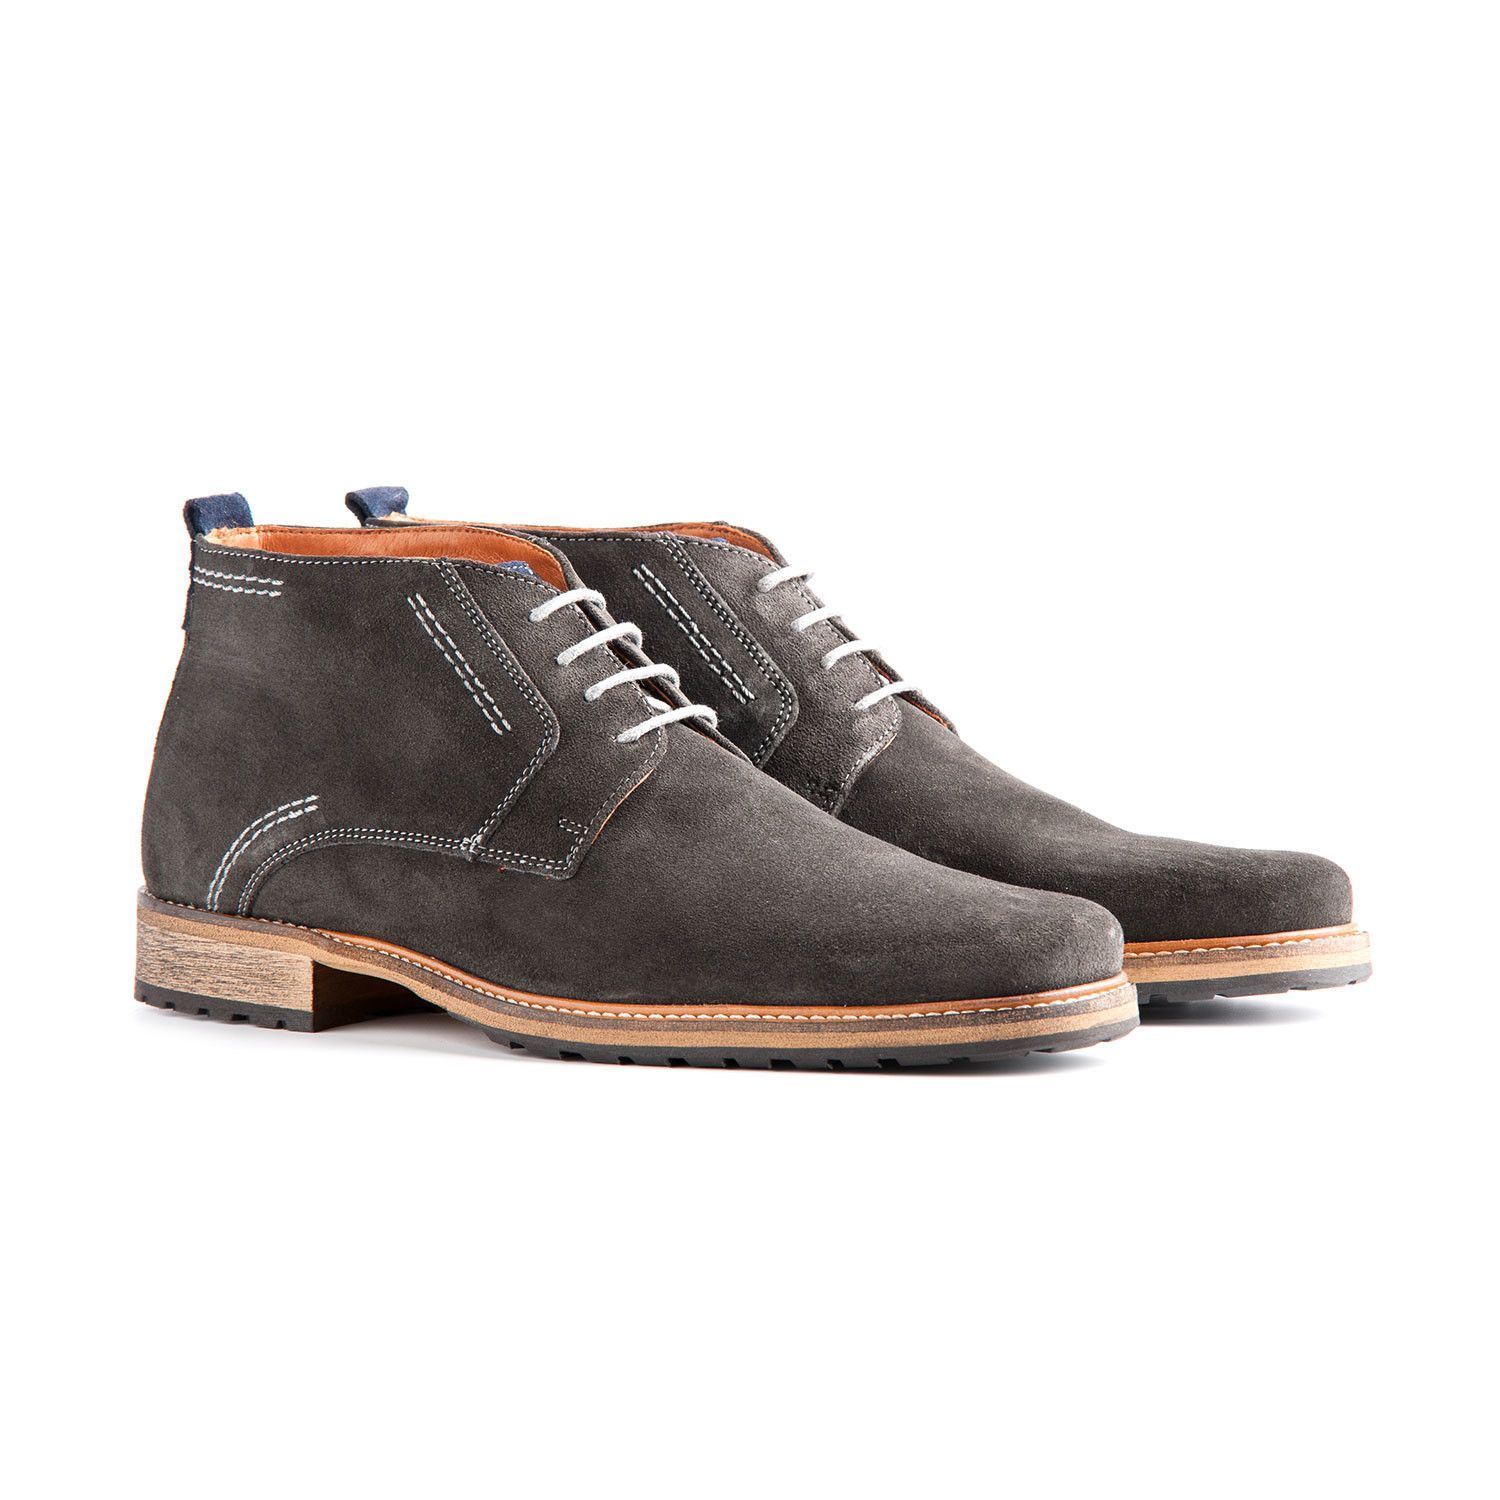 London Suede Shoe // Dark Gray - London Suede Shoe // Dark Gray -   19 style Mens shoes ideas